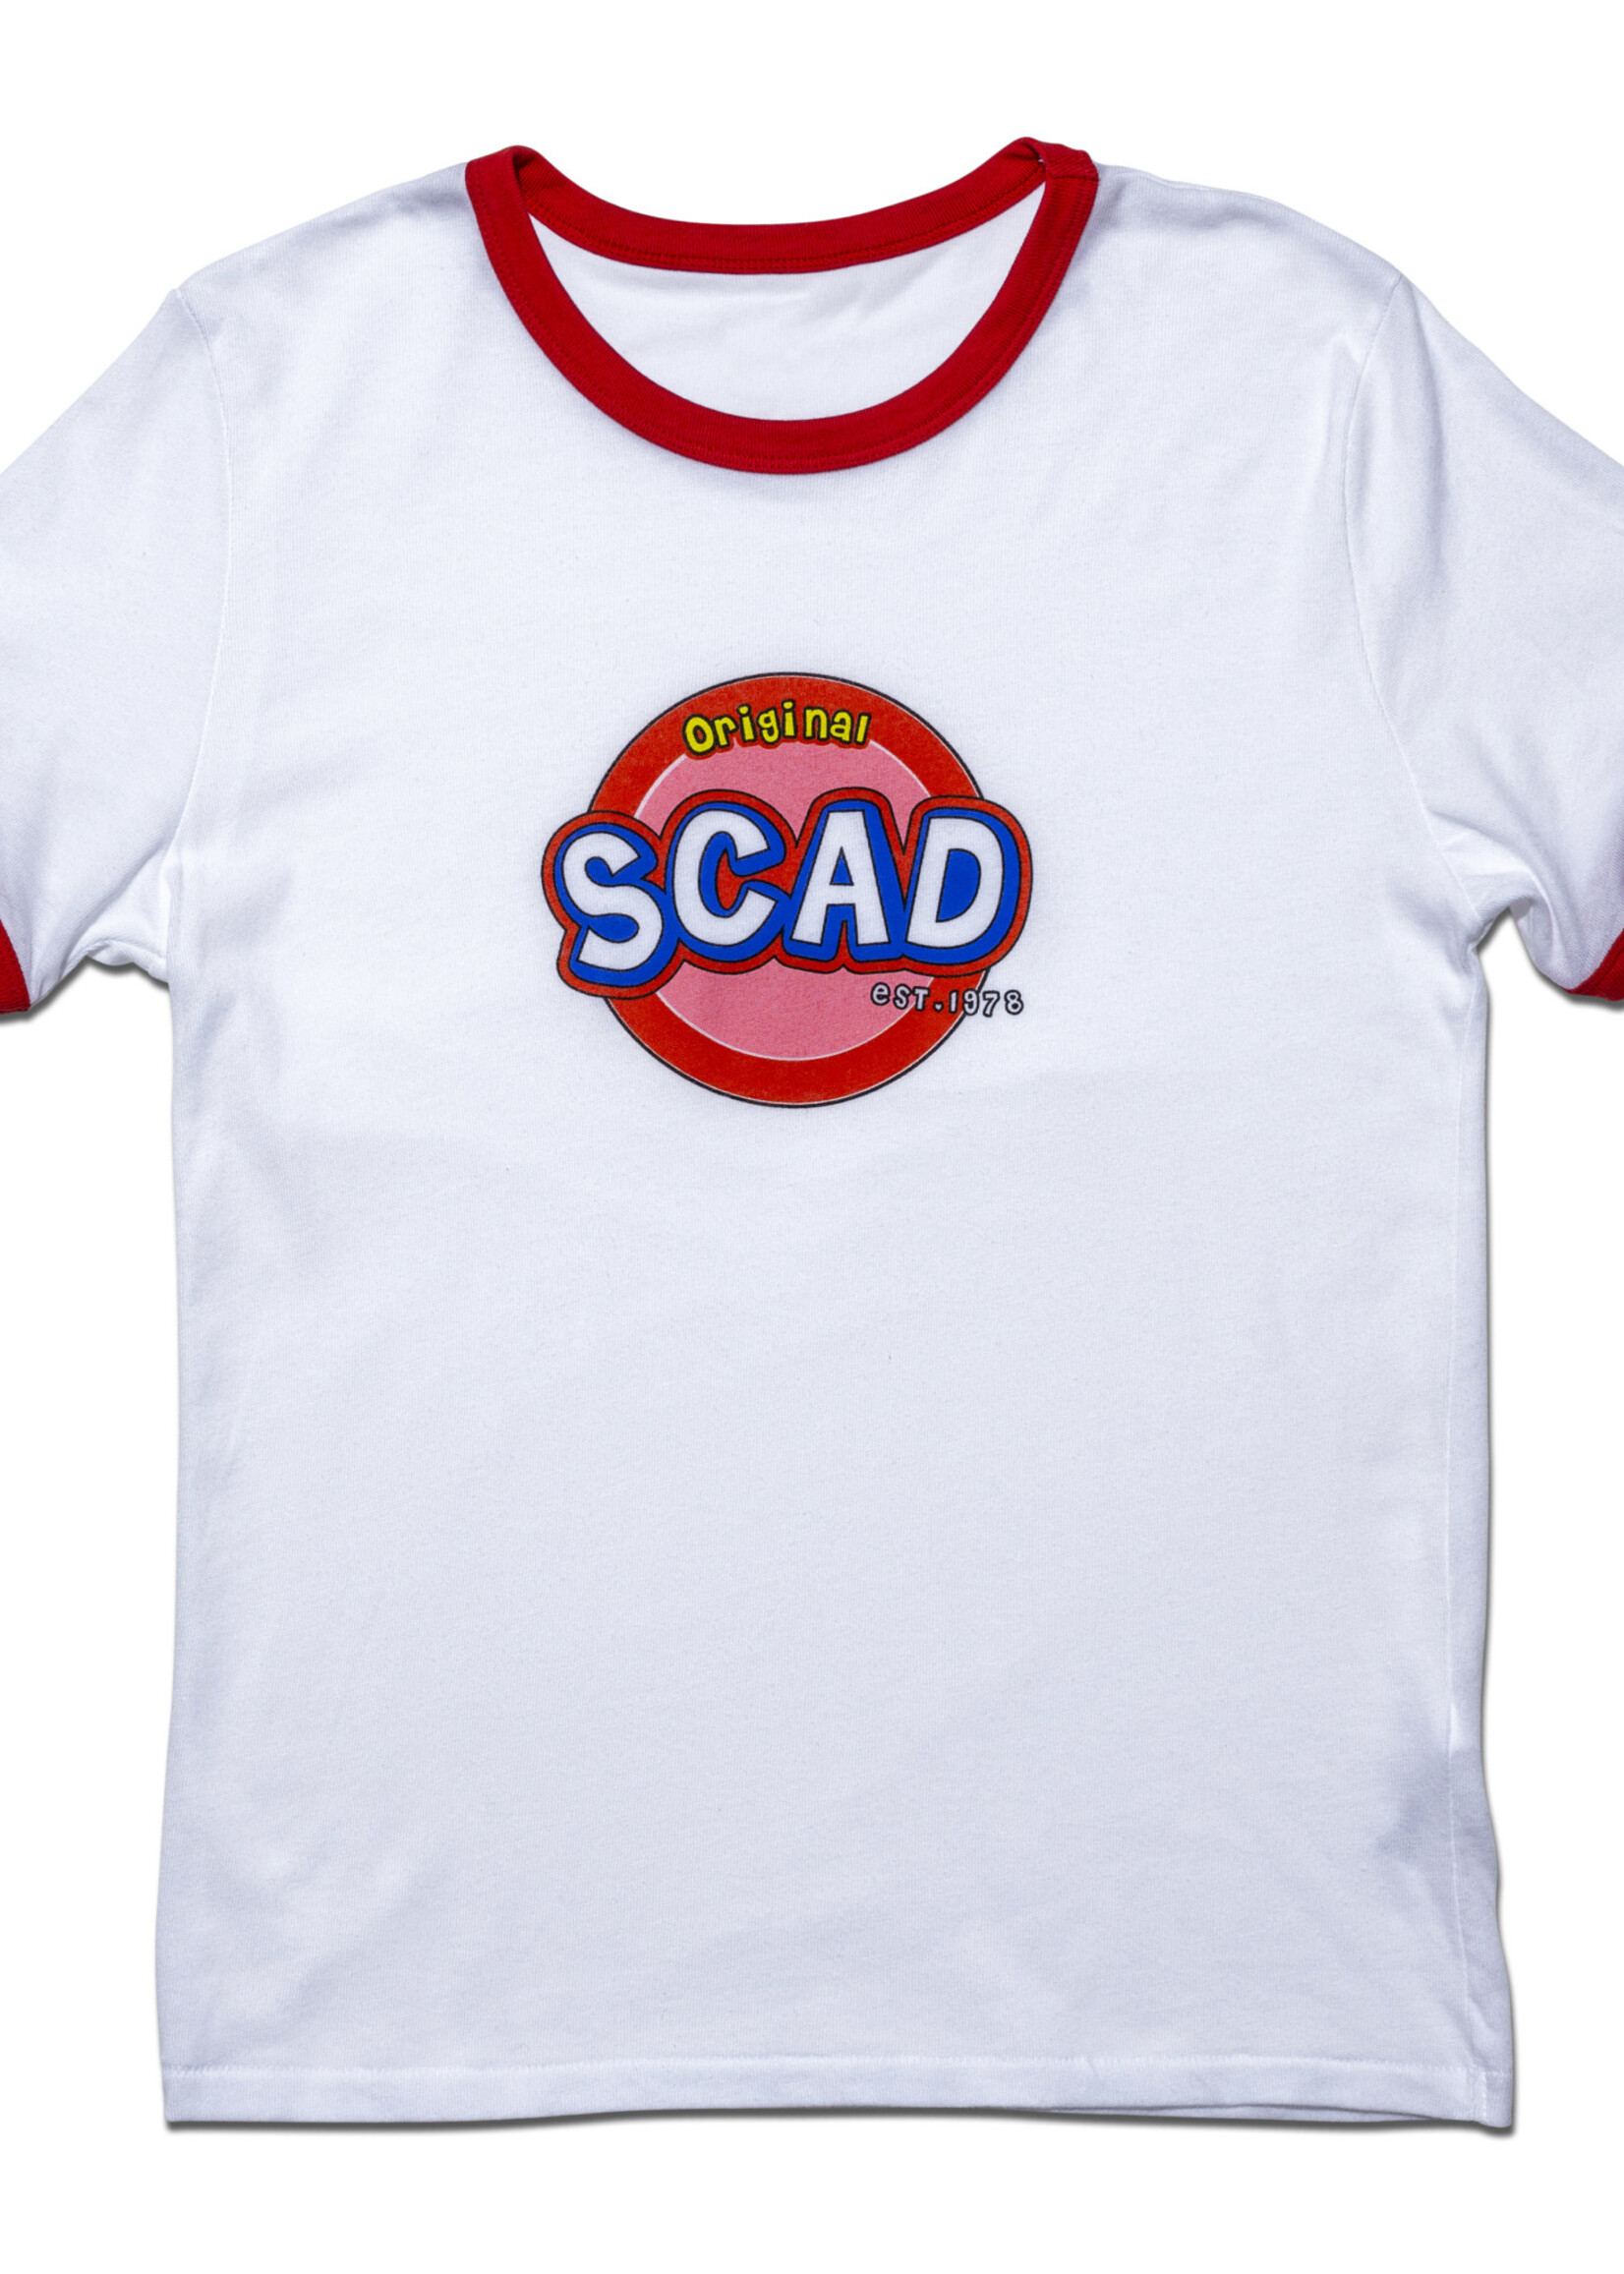 SCAD SCAD Original Est. 1978 Ringer Shirt